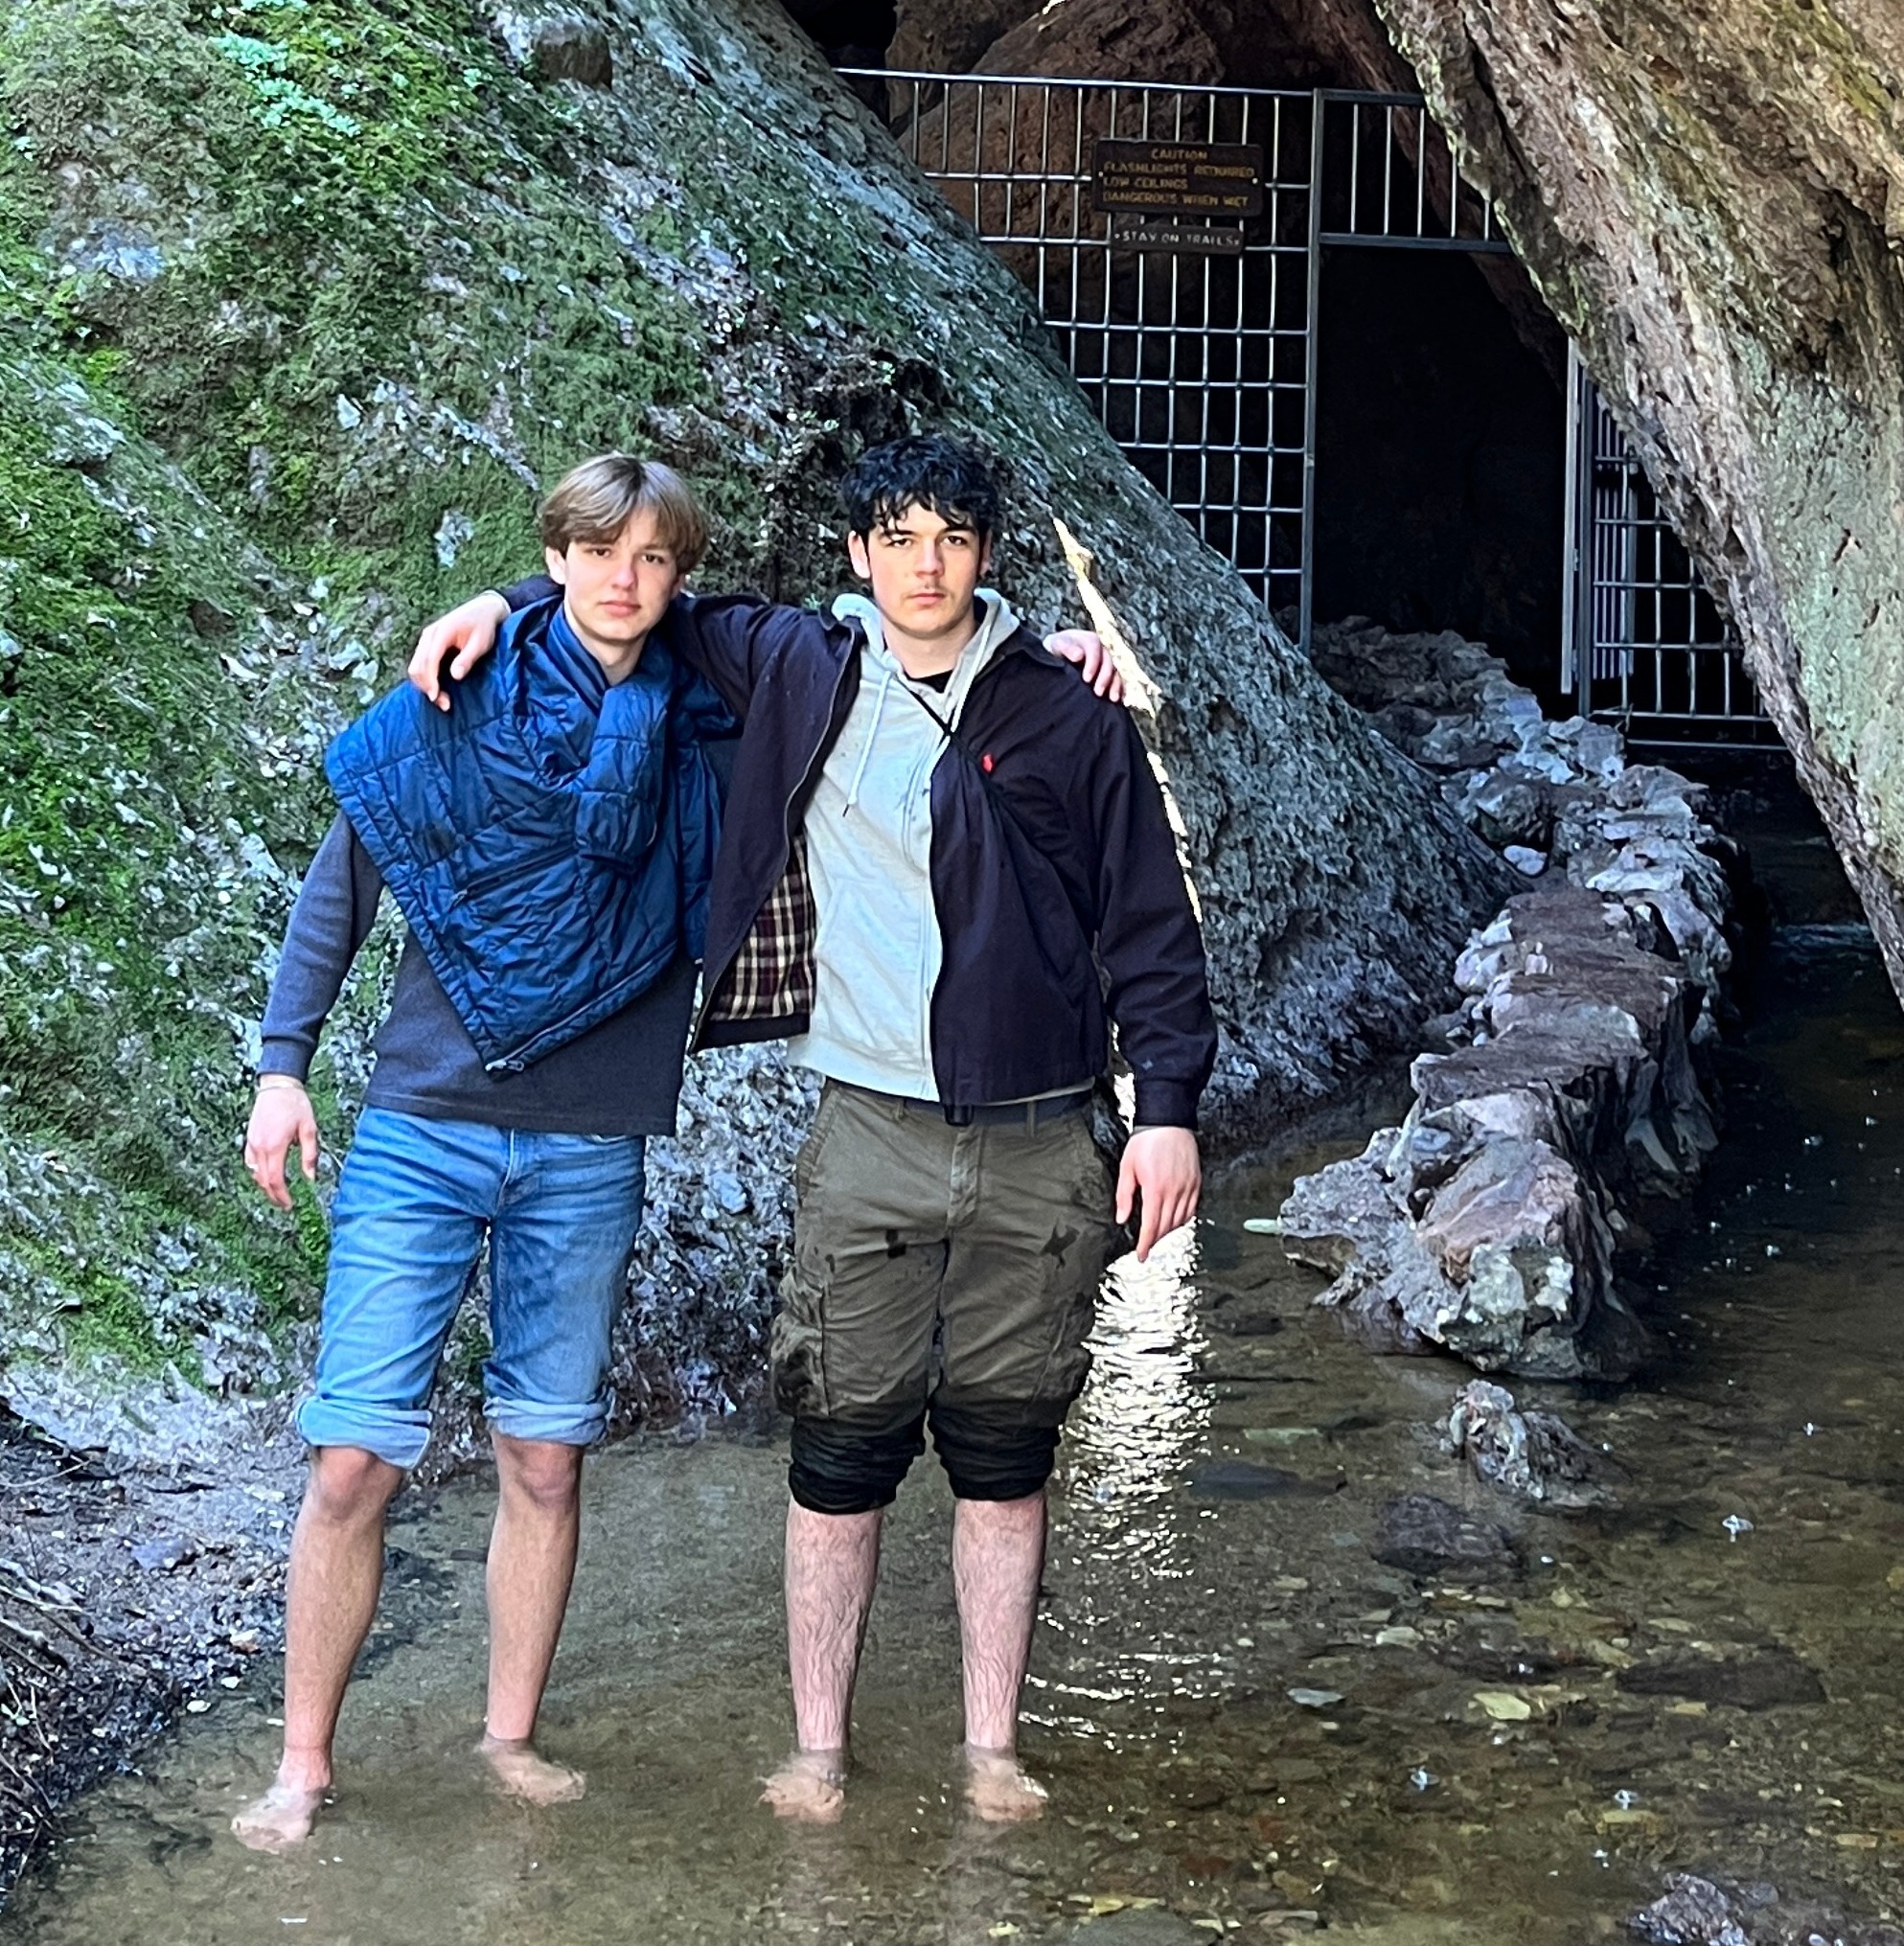 Two students visit Pinnacles National Parkl